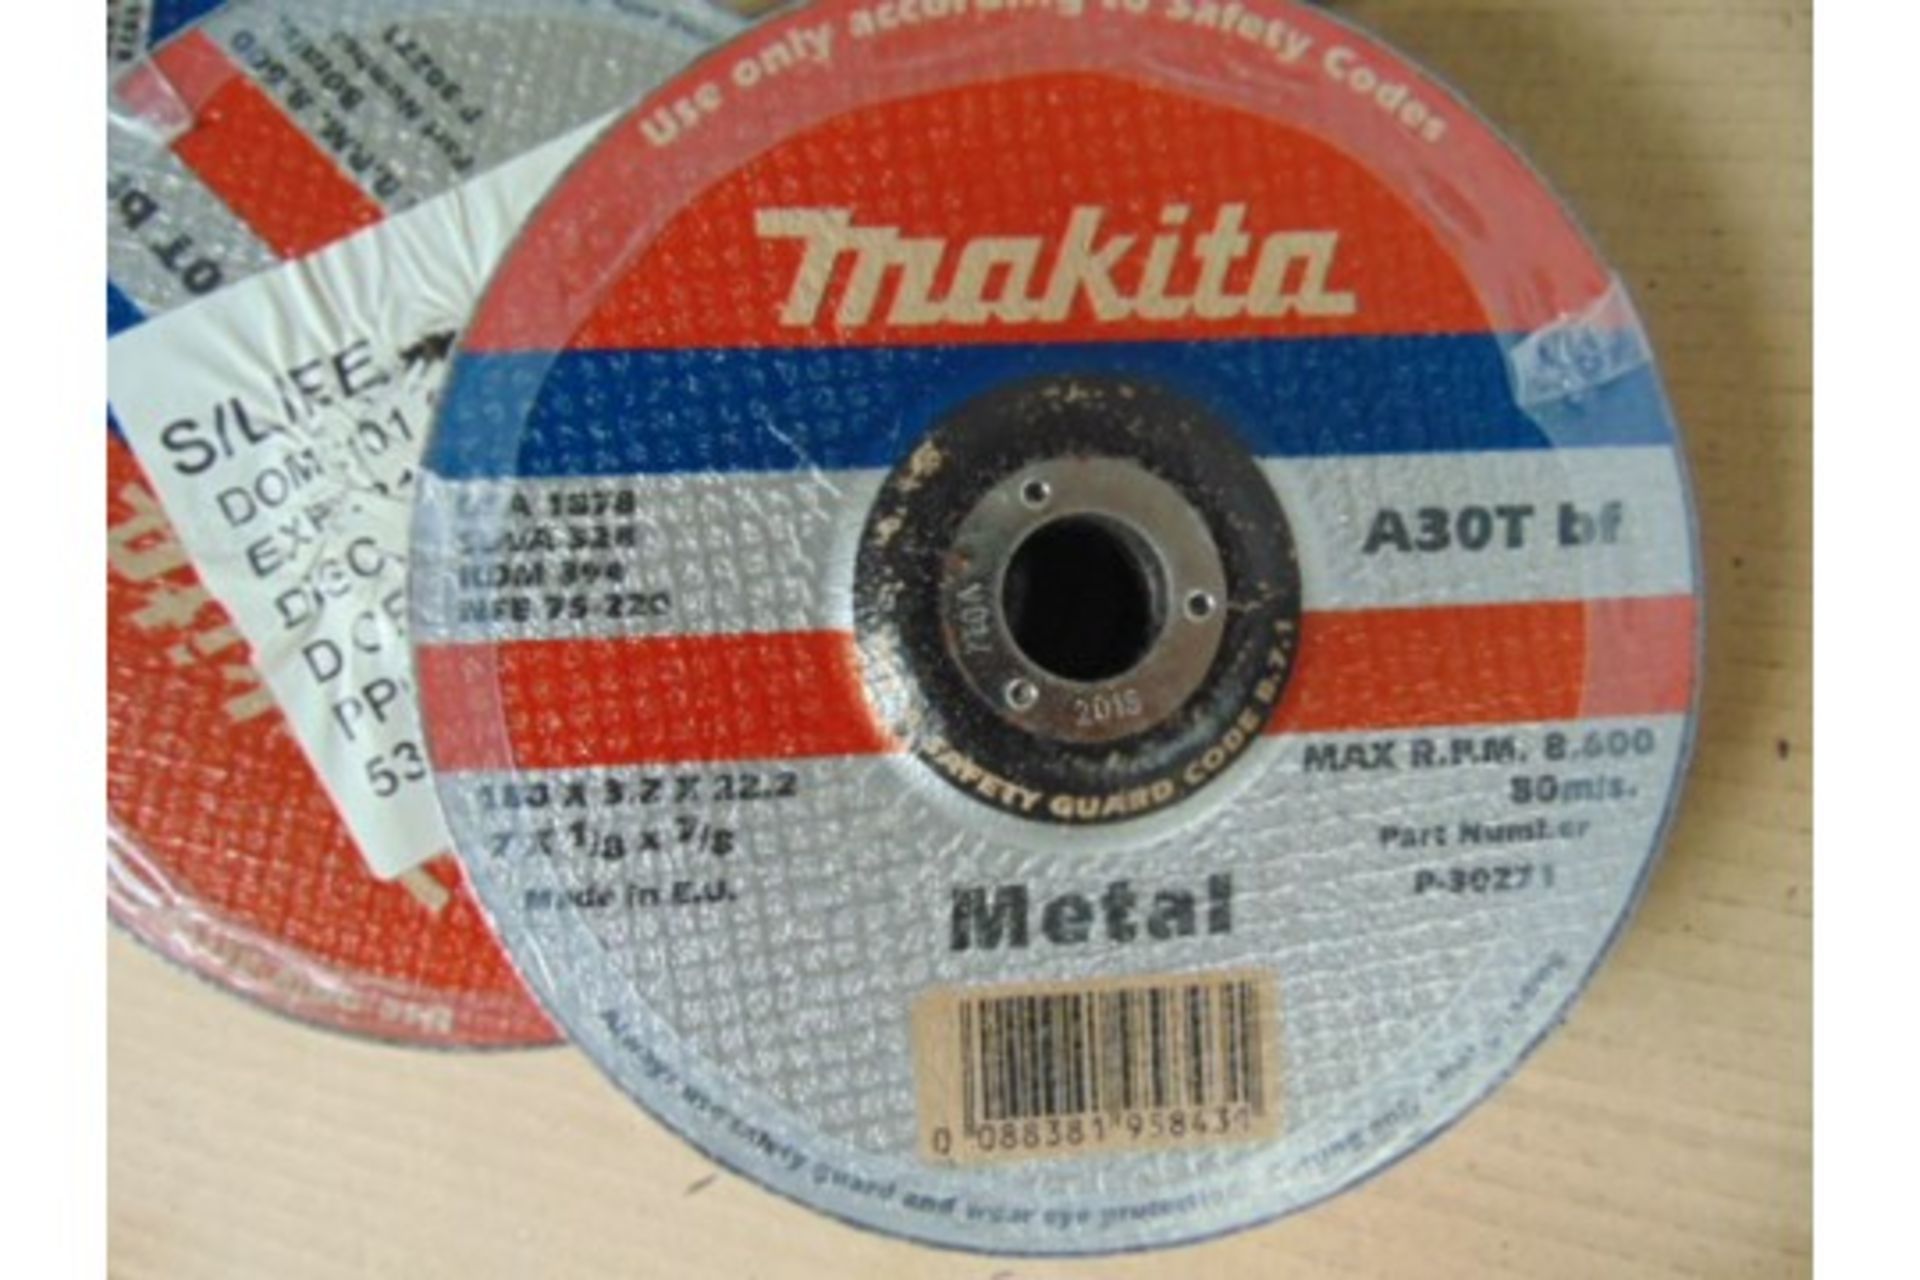 70 x Makita Metal Grinding Discs 180 x 3.2 x 22.2 A30T bf p.30271